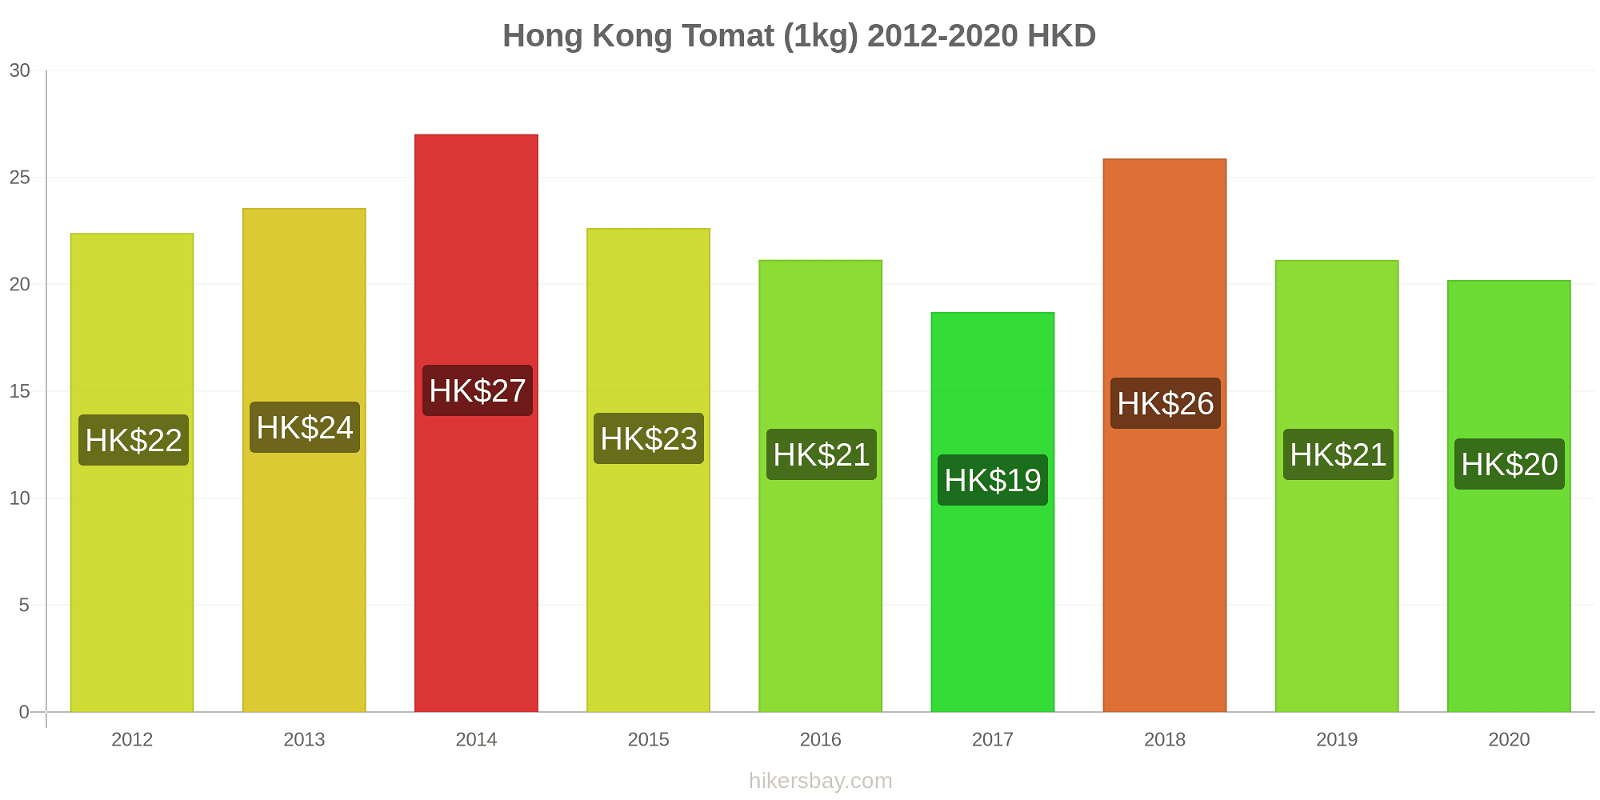 Hong Kong perubahan harga Tomat (1kg) hikersbay.com